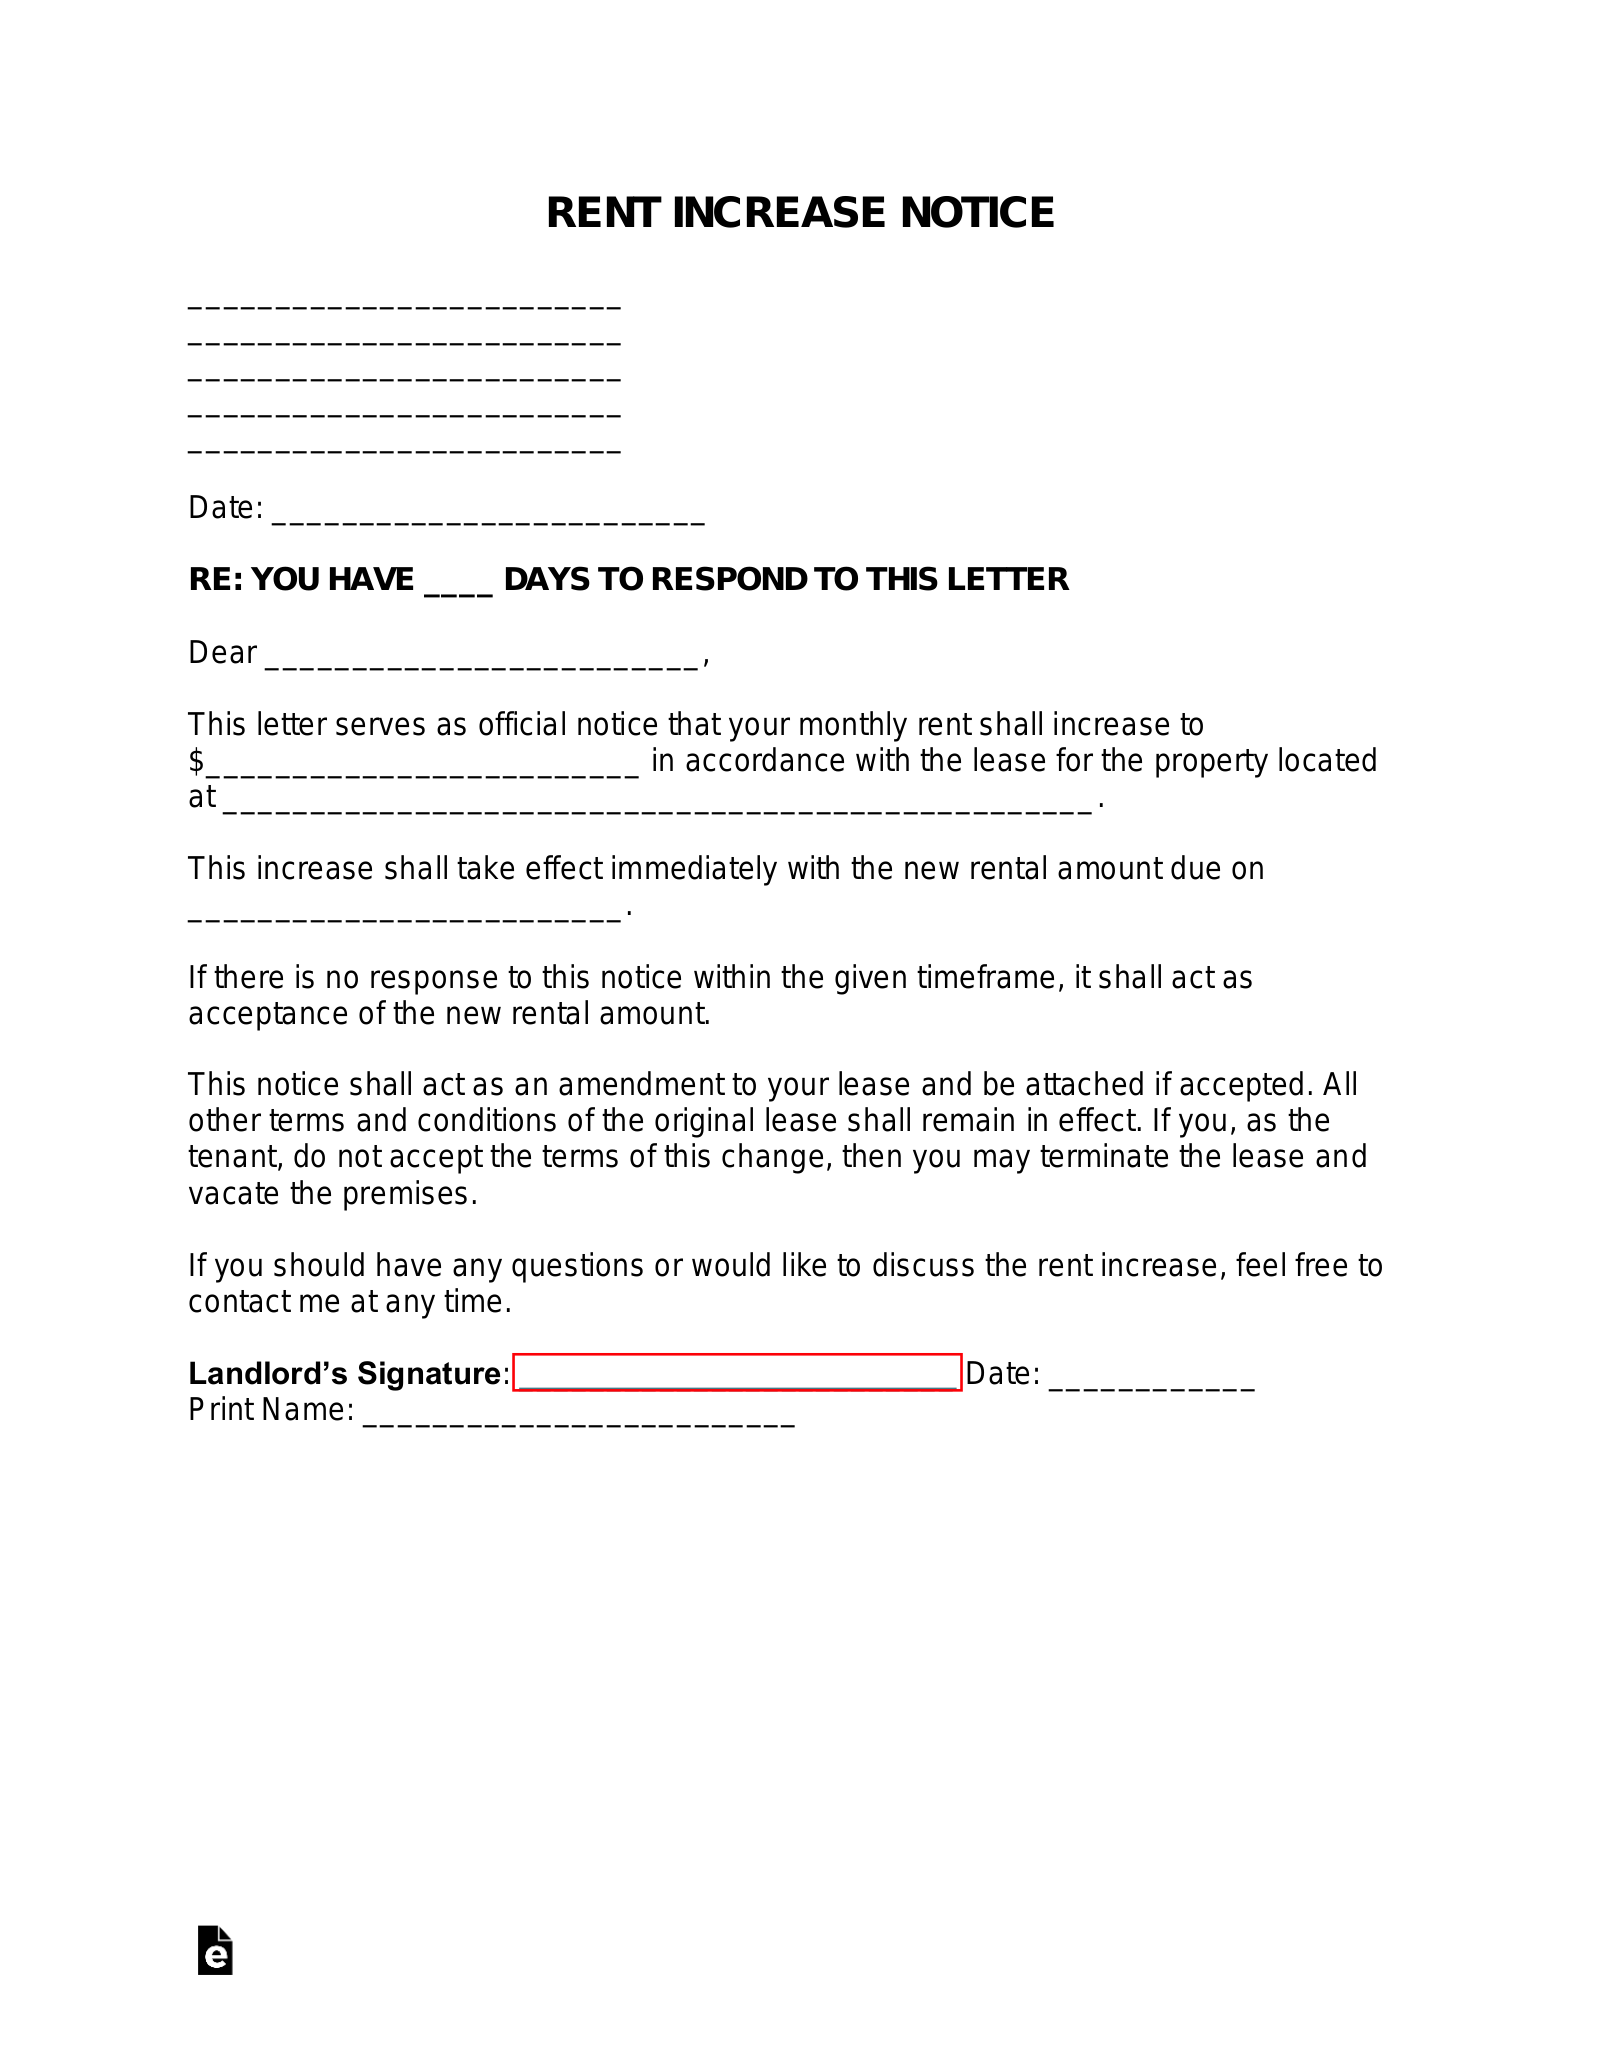 free-rent-increase-notice-letter-sample-pdf-word-eforms